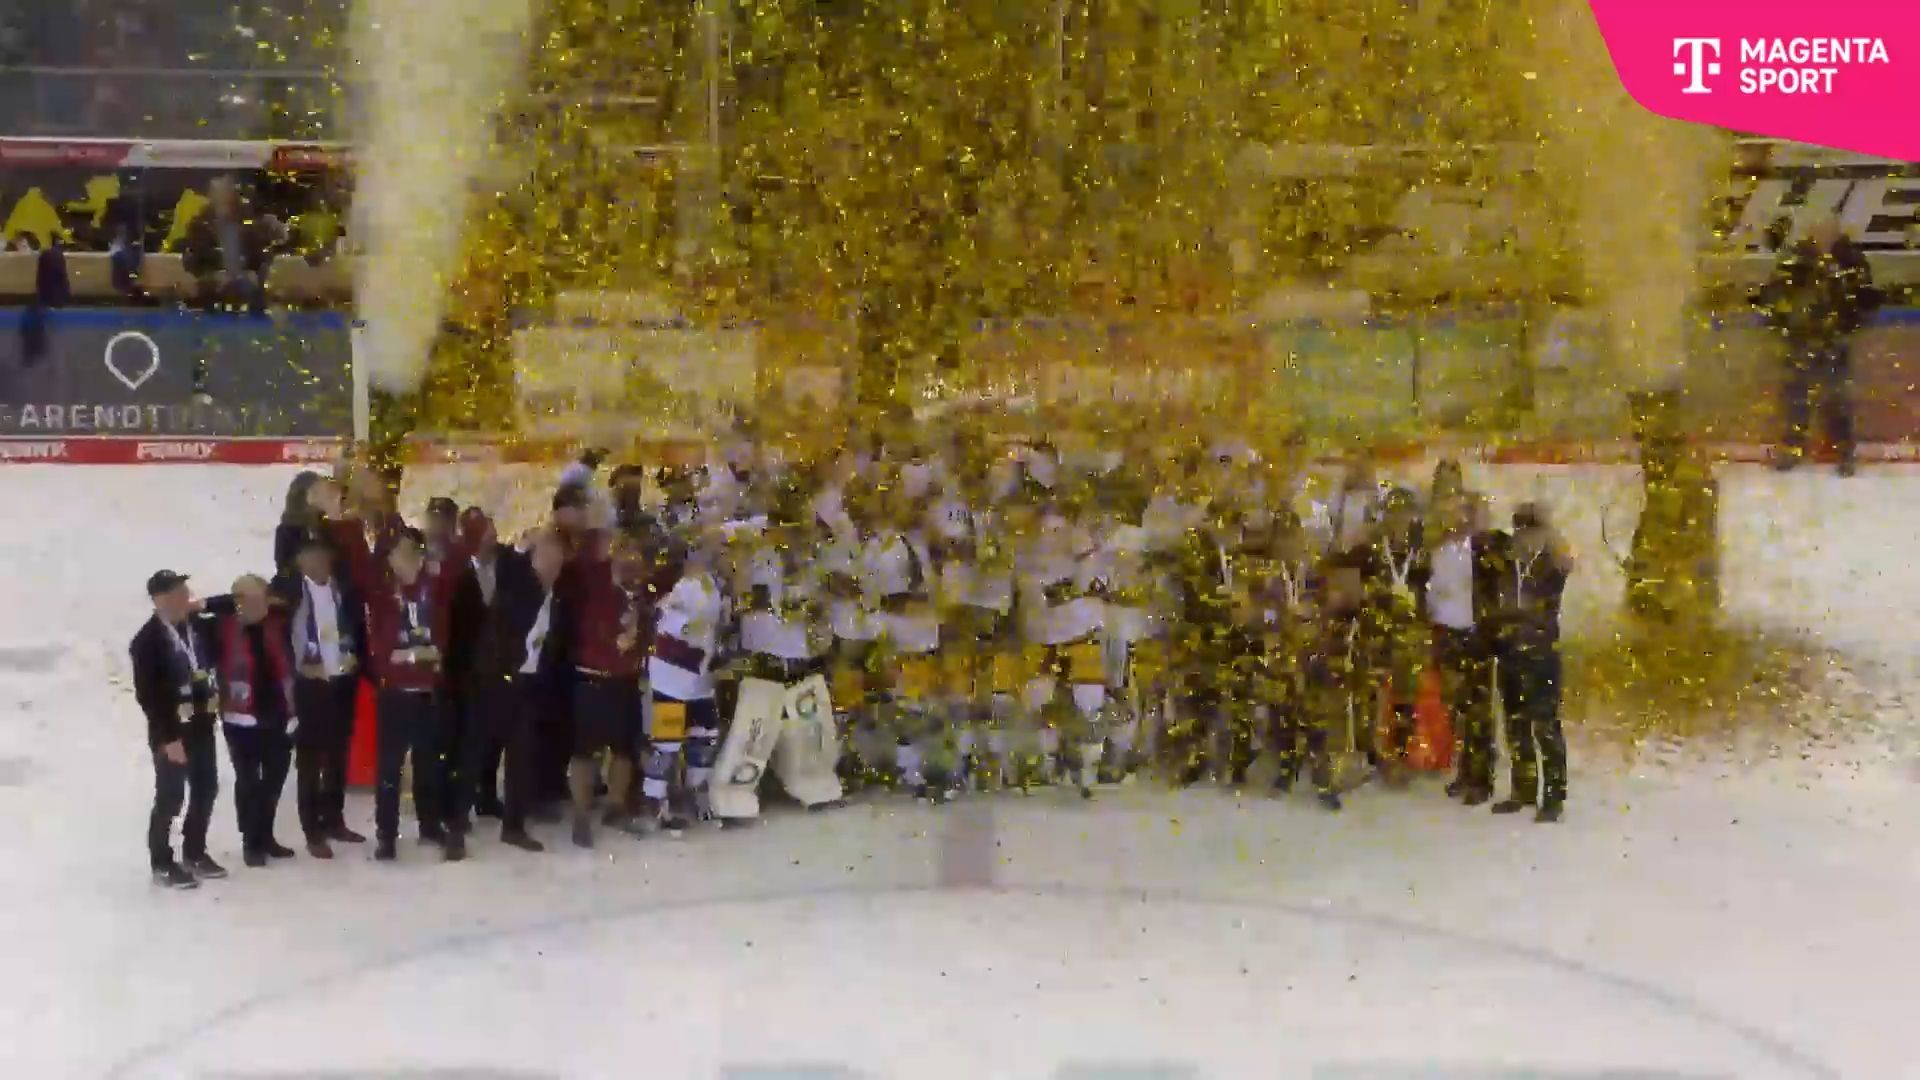 Ice hockey: Eisbären Berlin celebrate their tenth title win